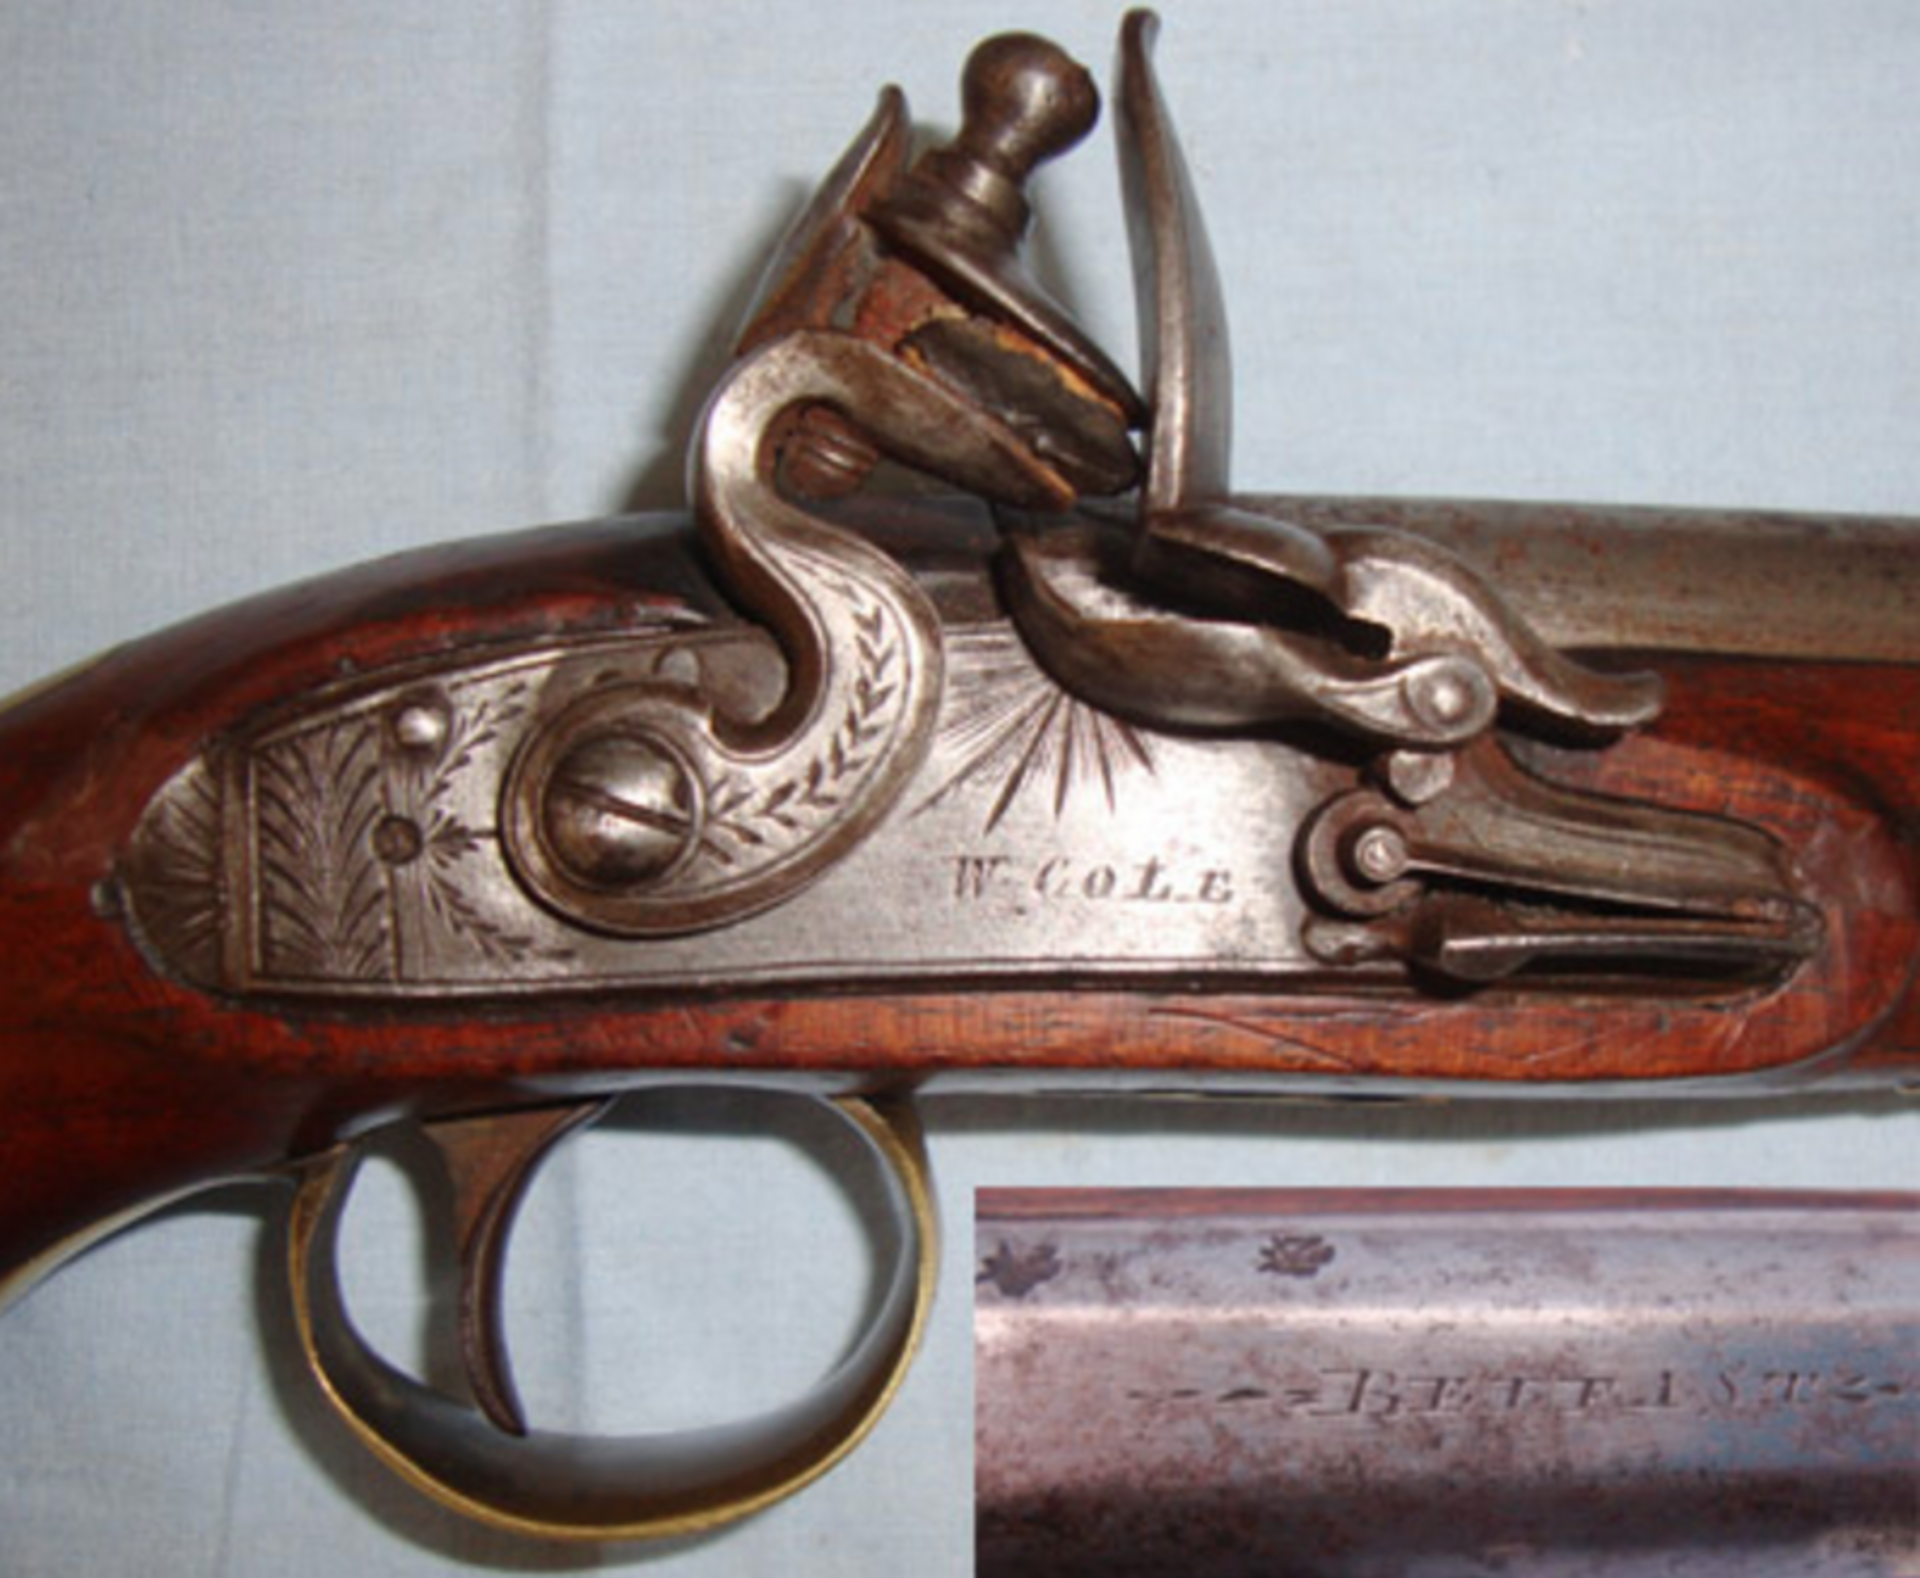 William Cole, Belfast 1811 & 1838 Irish .577” Bore Flintlock Traveling Pistol. - Image 3 of 3